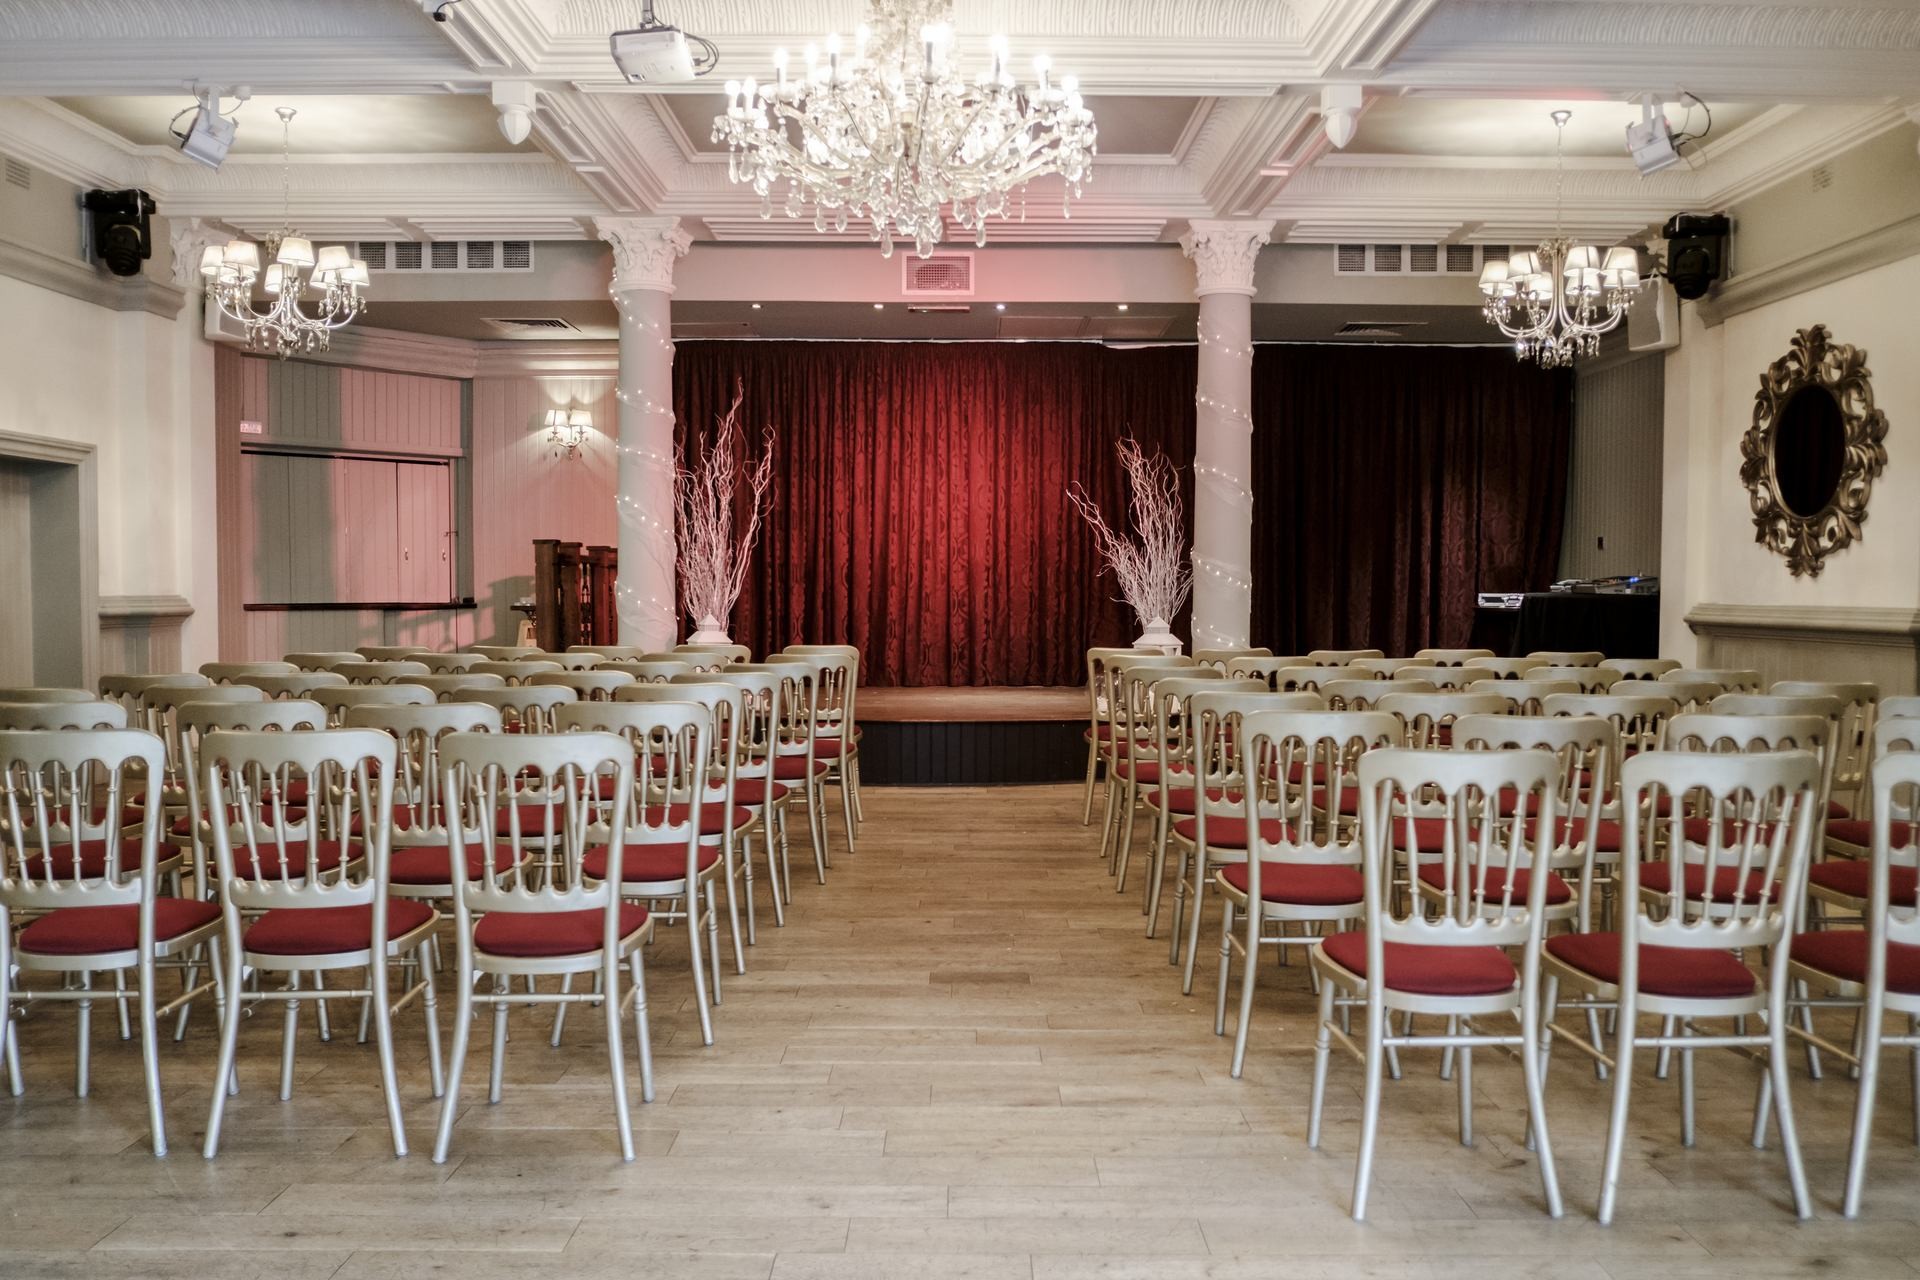 The Ballroom Room at The Drayton Court Hotel